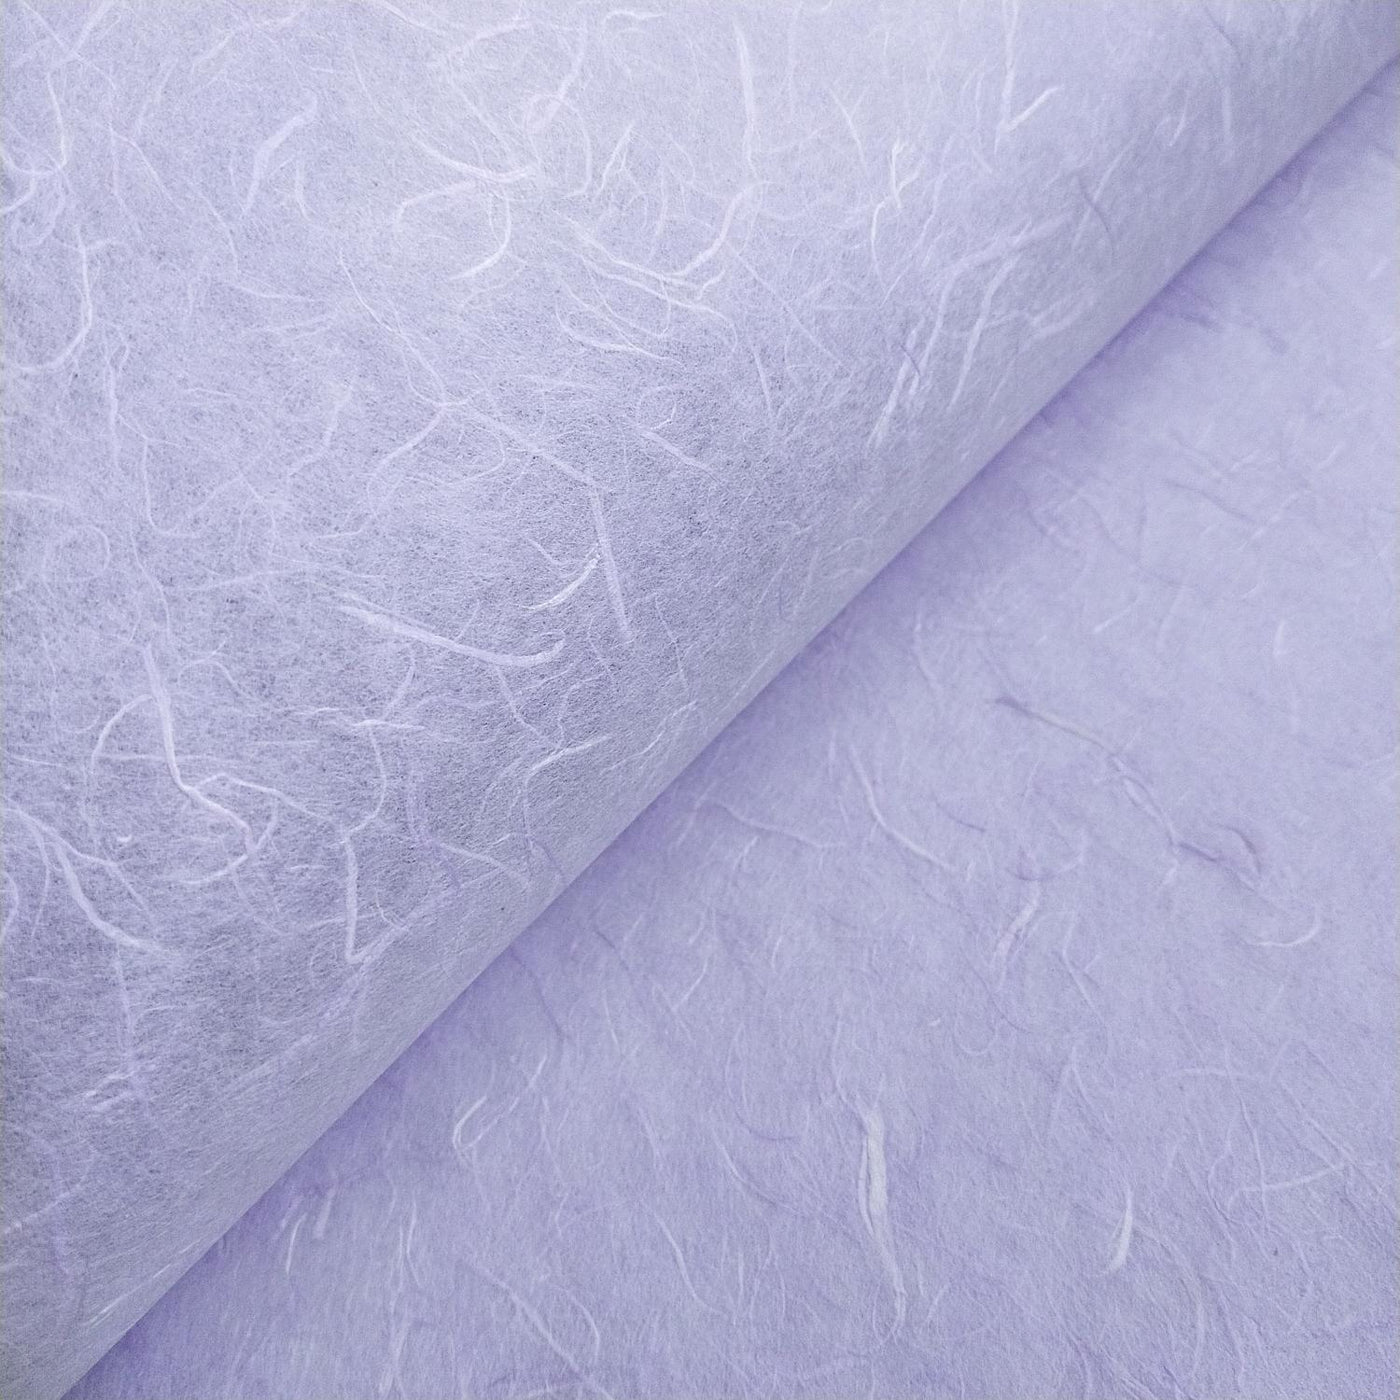 Unryu Kozo Mulberry Paper (Heather Purple)